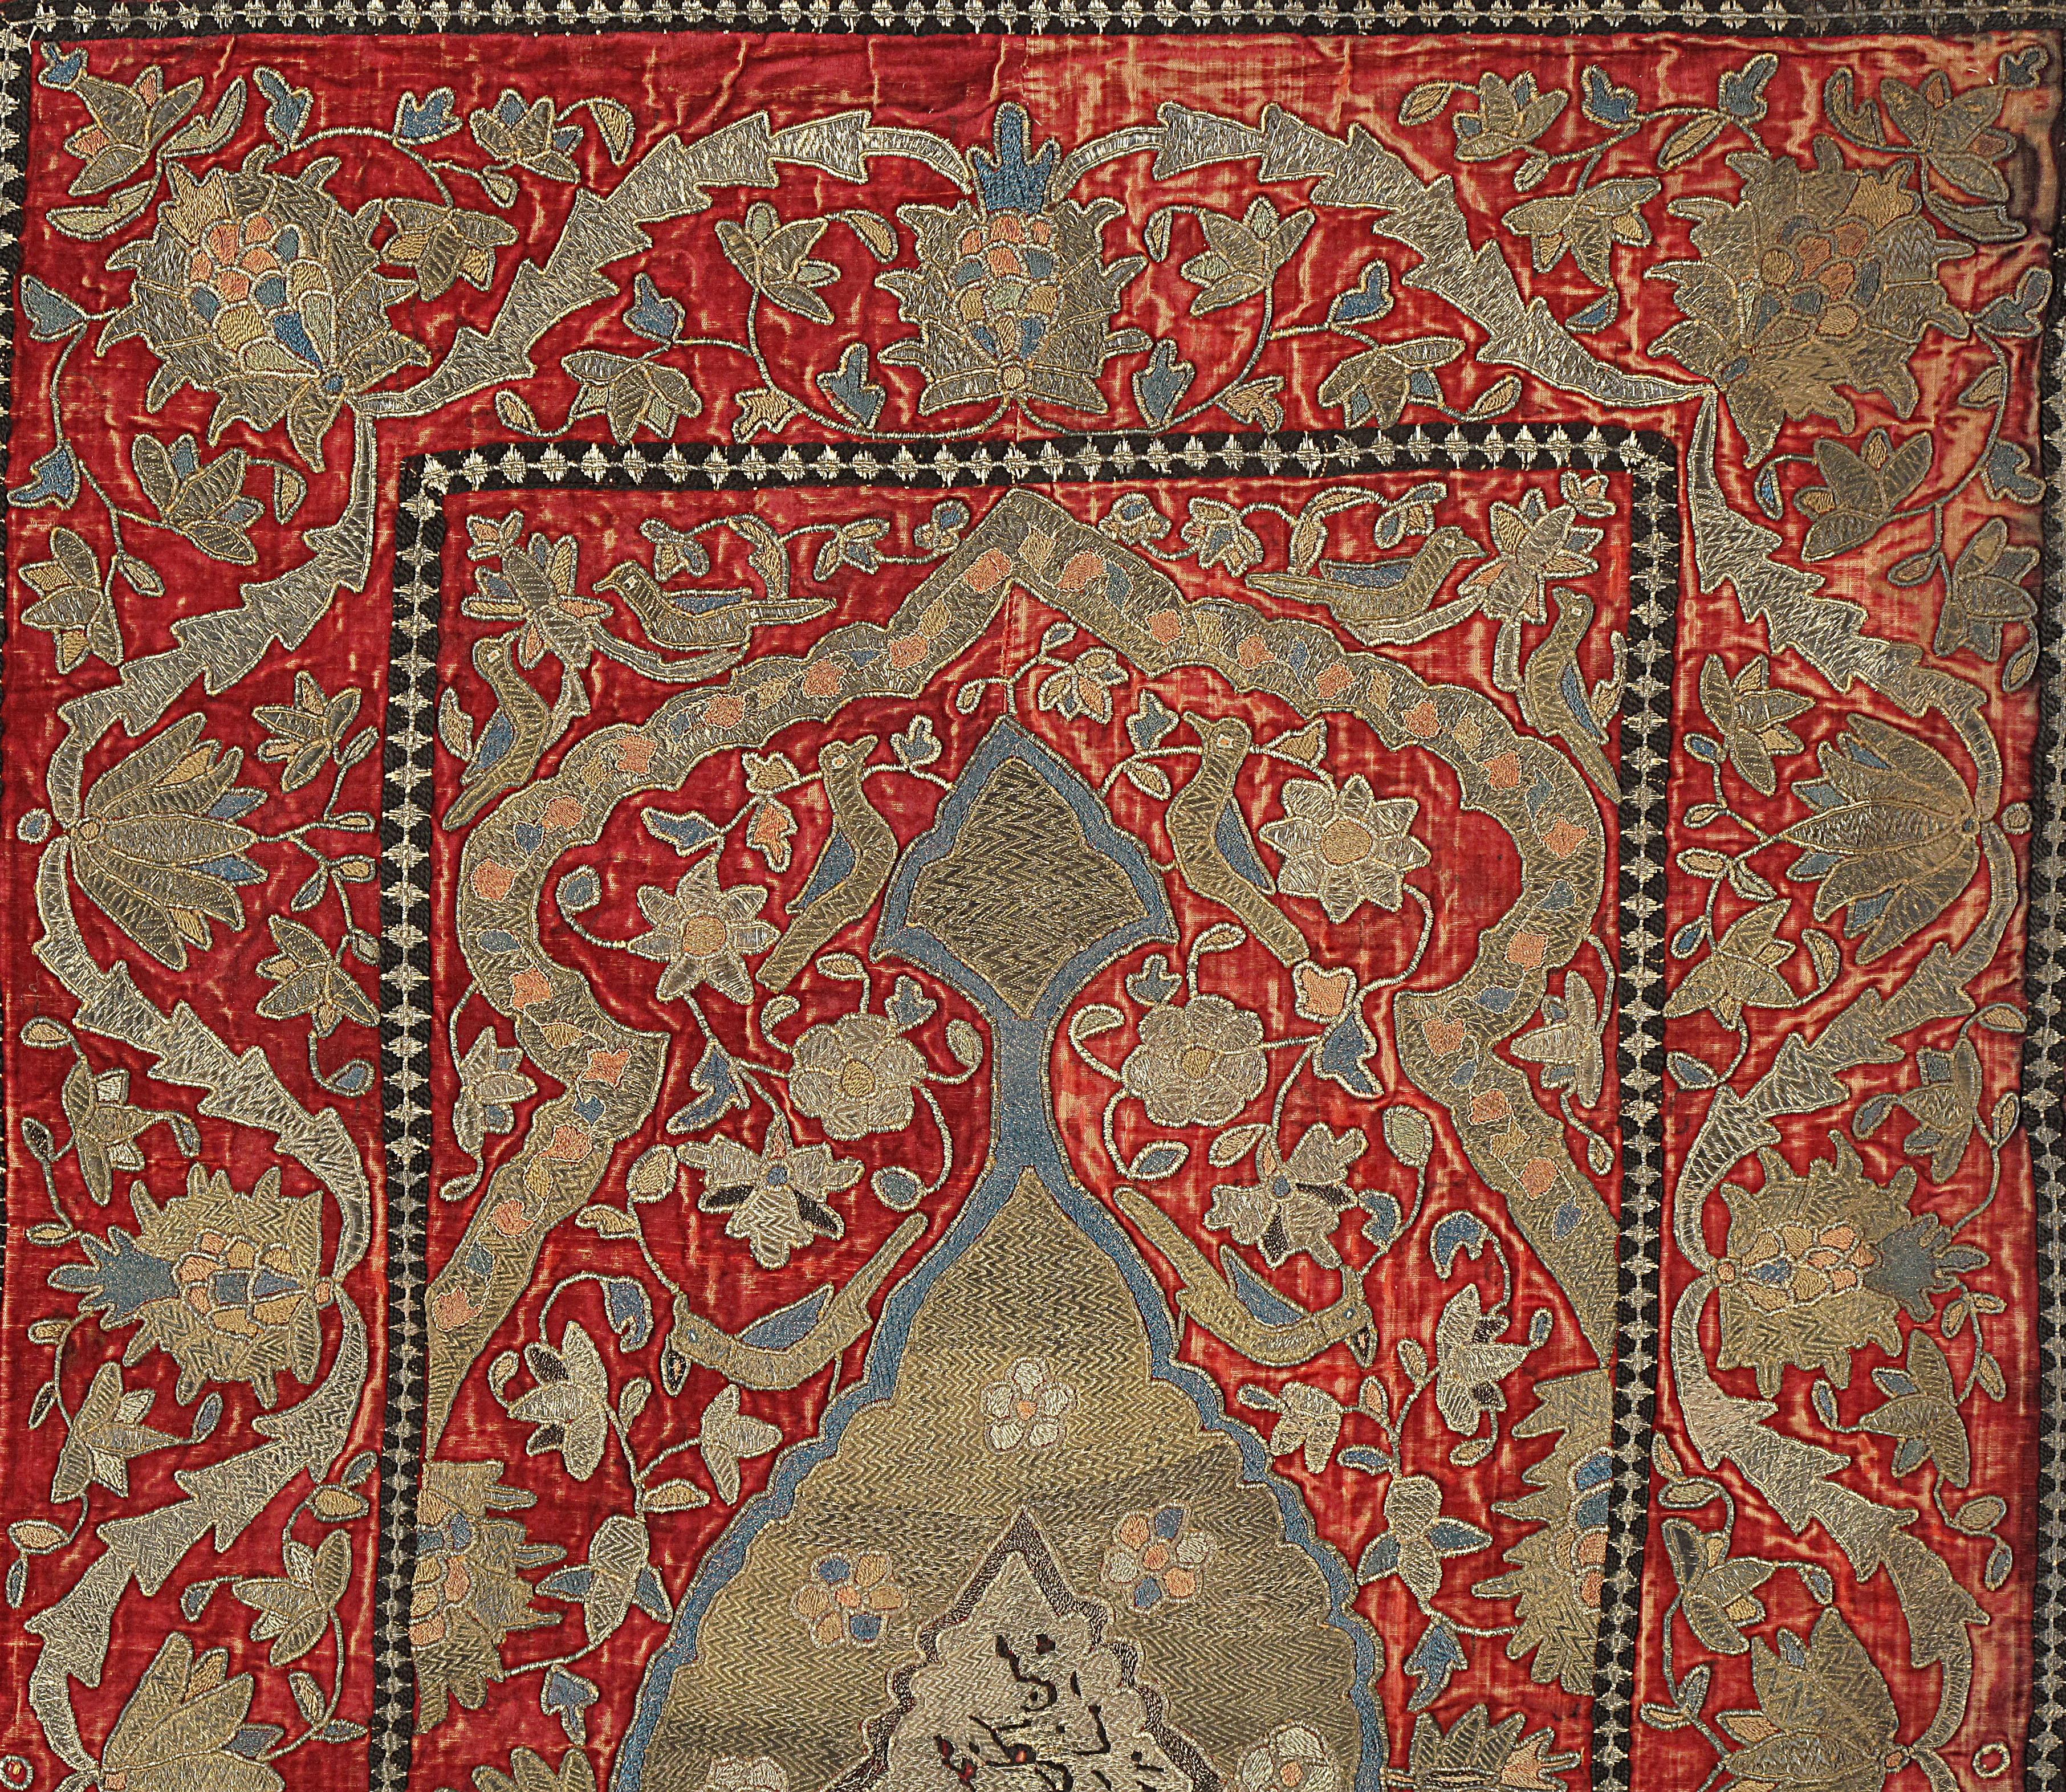 Antique velvet and metal applique, circa 1840. A wonderful Persian velvet and metal applique panel. Much sought after. Size: 2'8 x 4'6.